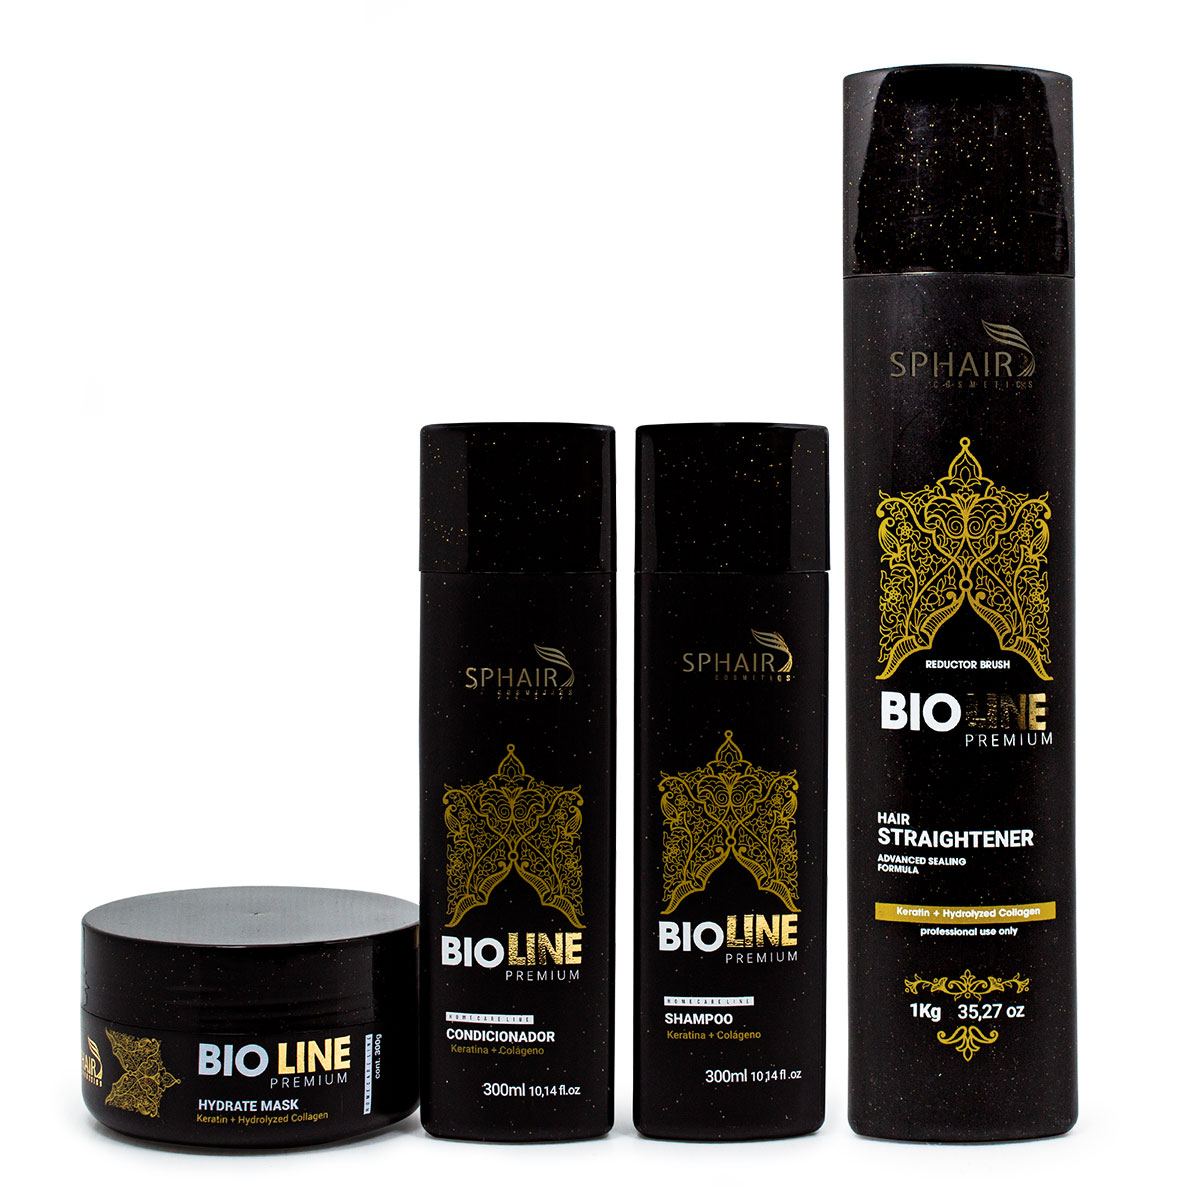 Bioline Premium Kit Completo Home Care + Progressiva - De R$ 546,30 Por R$ 382,40